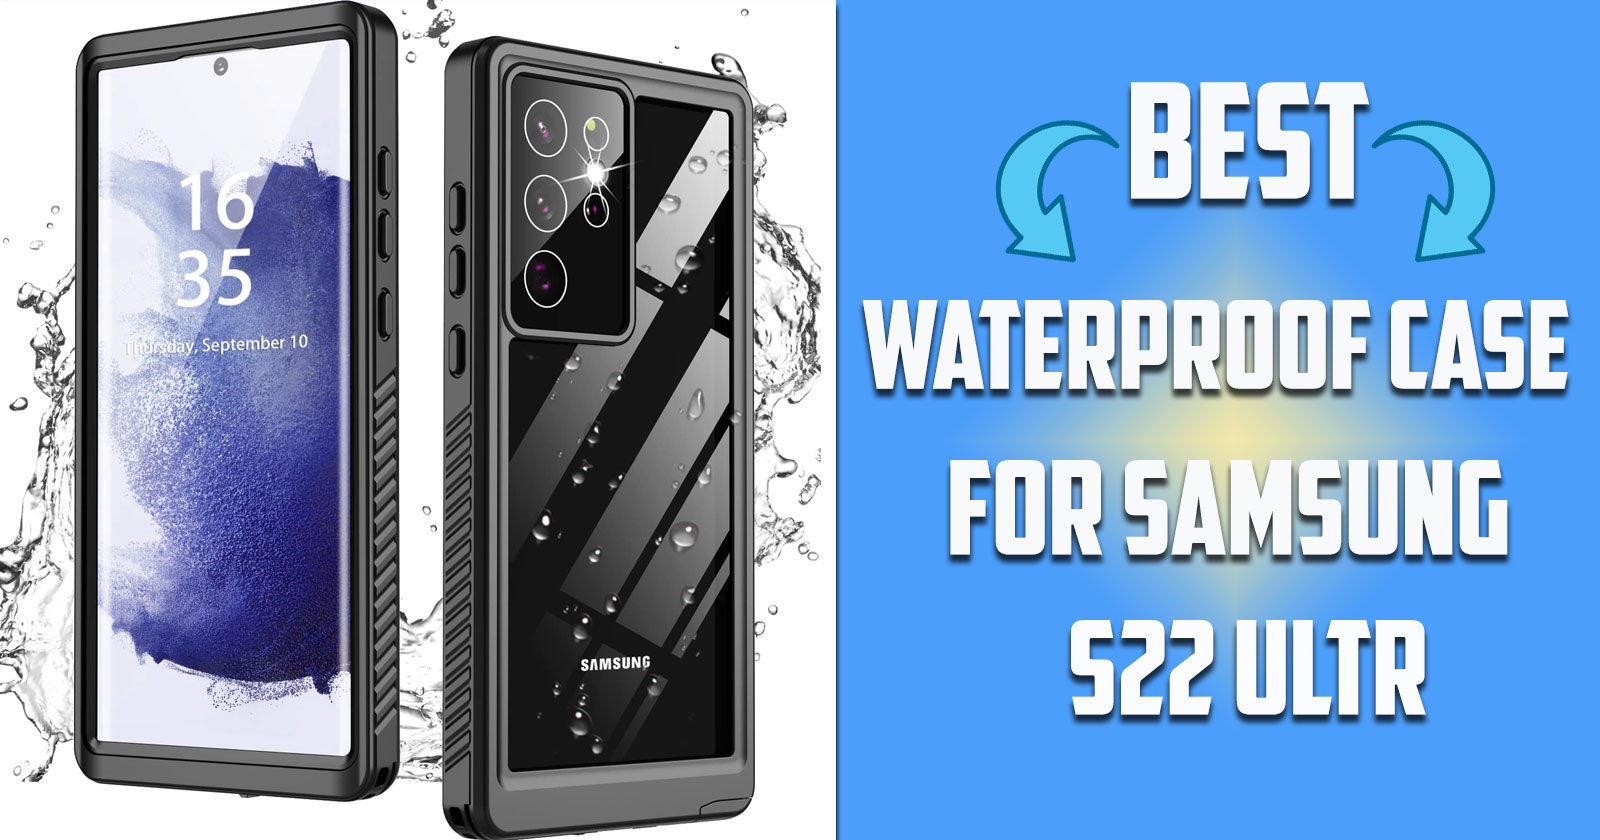 Best Waterproof Case for Samsung S22 Ultra